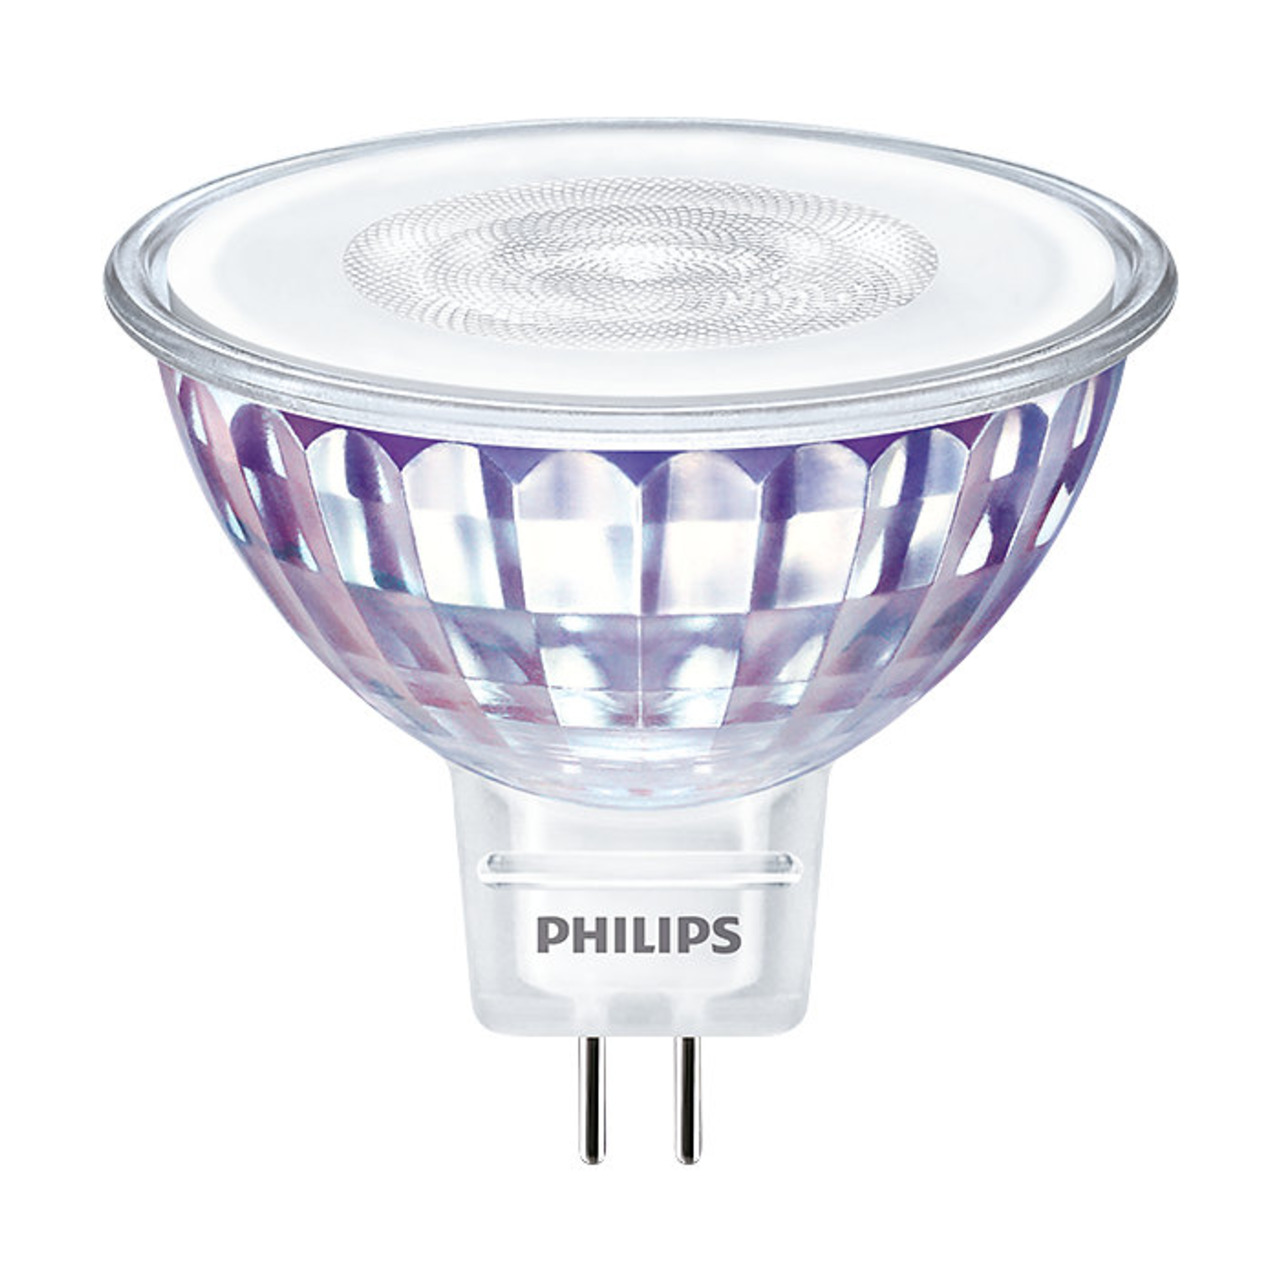 Philips 7-5-W-GU5-3-LED-Lampe Master LEDspot Value- MR16- 621 lm- warmweiss (2700 K)- 36- dimmbar unter Beleuchtung